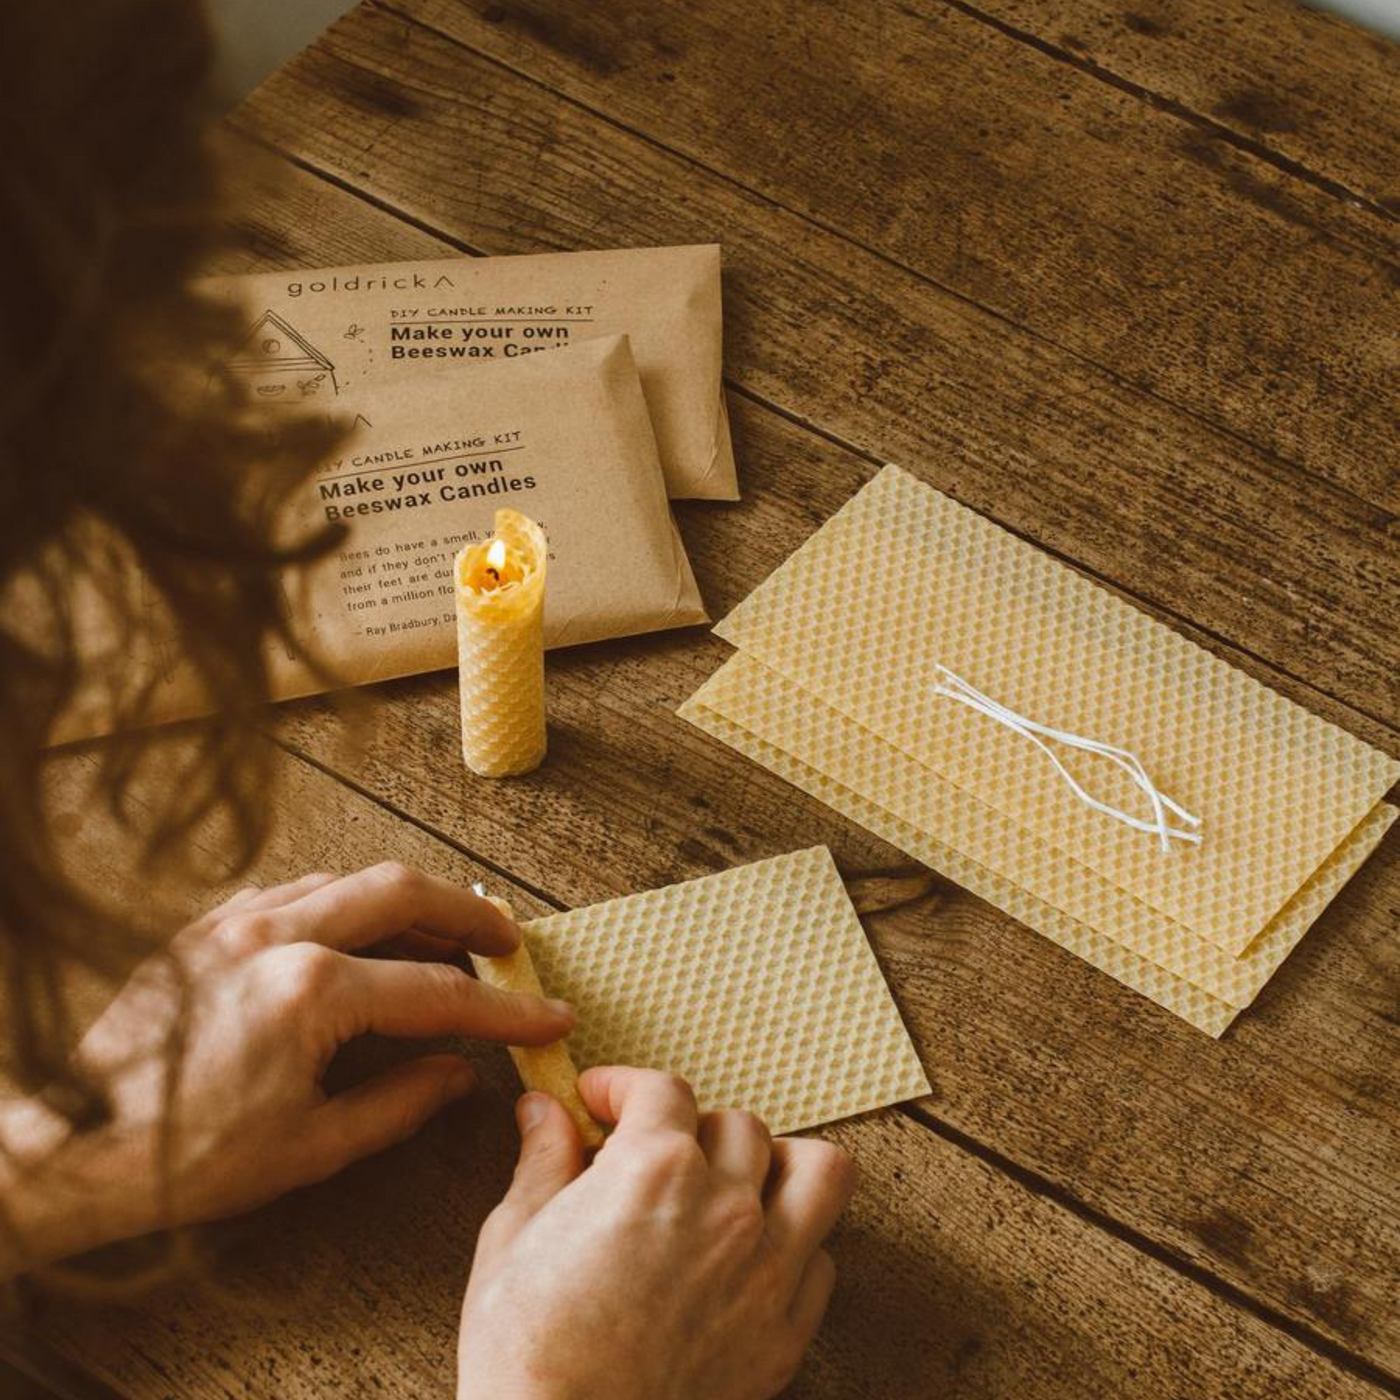 Radical Giving - Goldrick - Beeswax Candle Making Kit